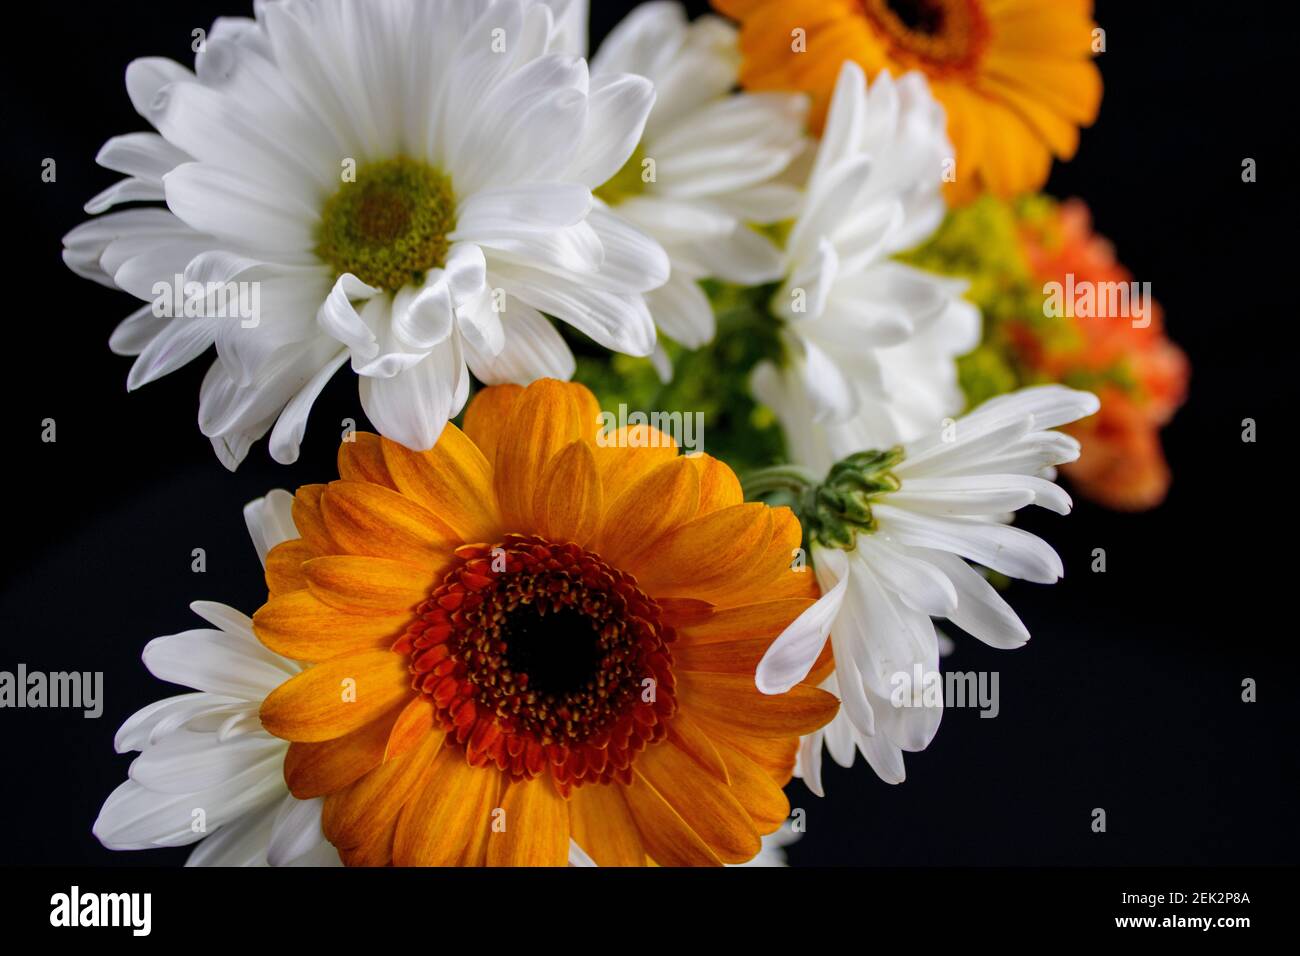 Daisy and sunflower Stock Photo